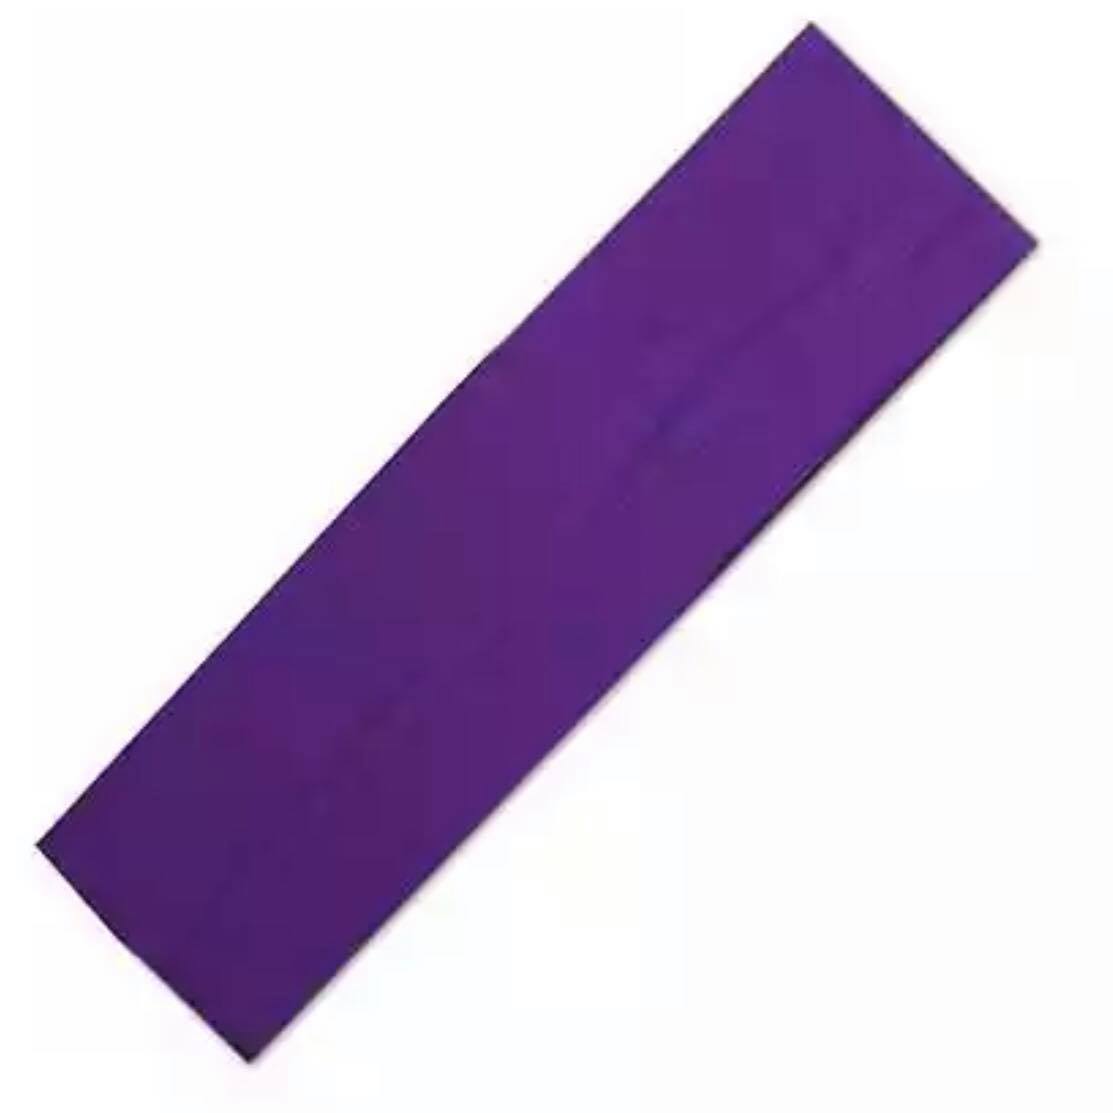 Stretch Headband for School, Sport, Yoga Headbands School Ponytails Purple 